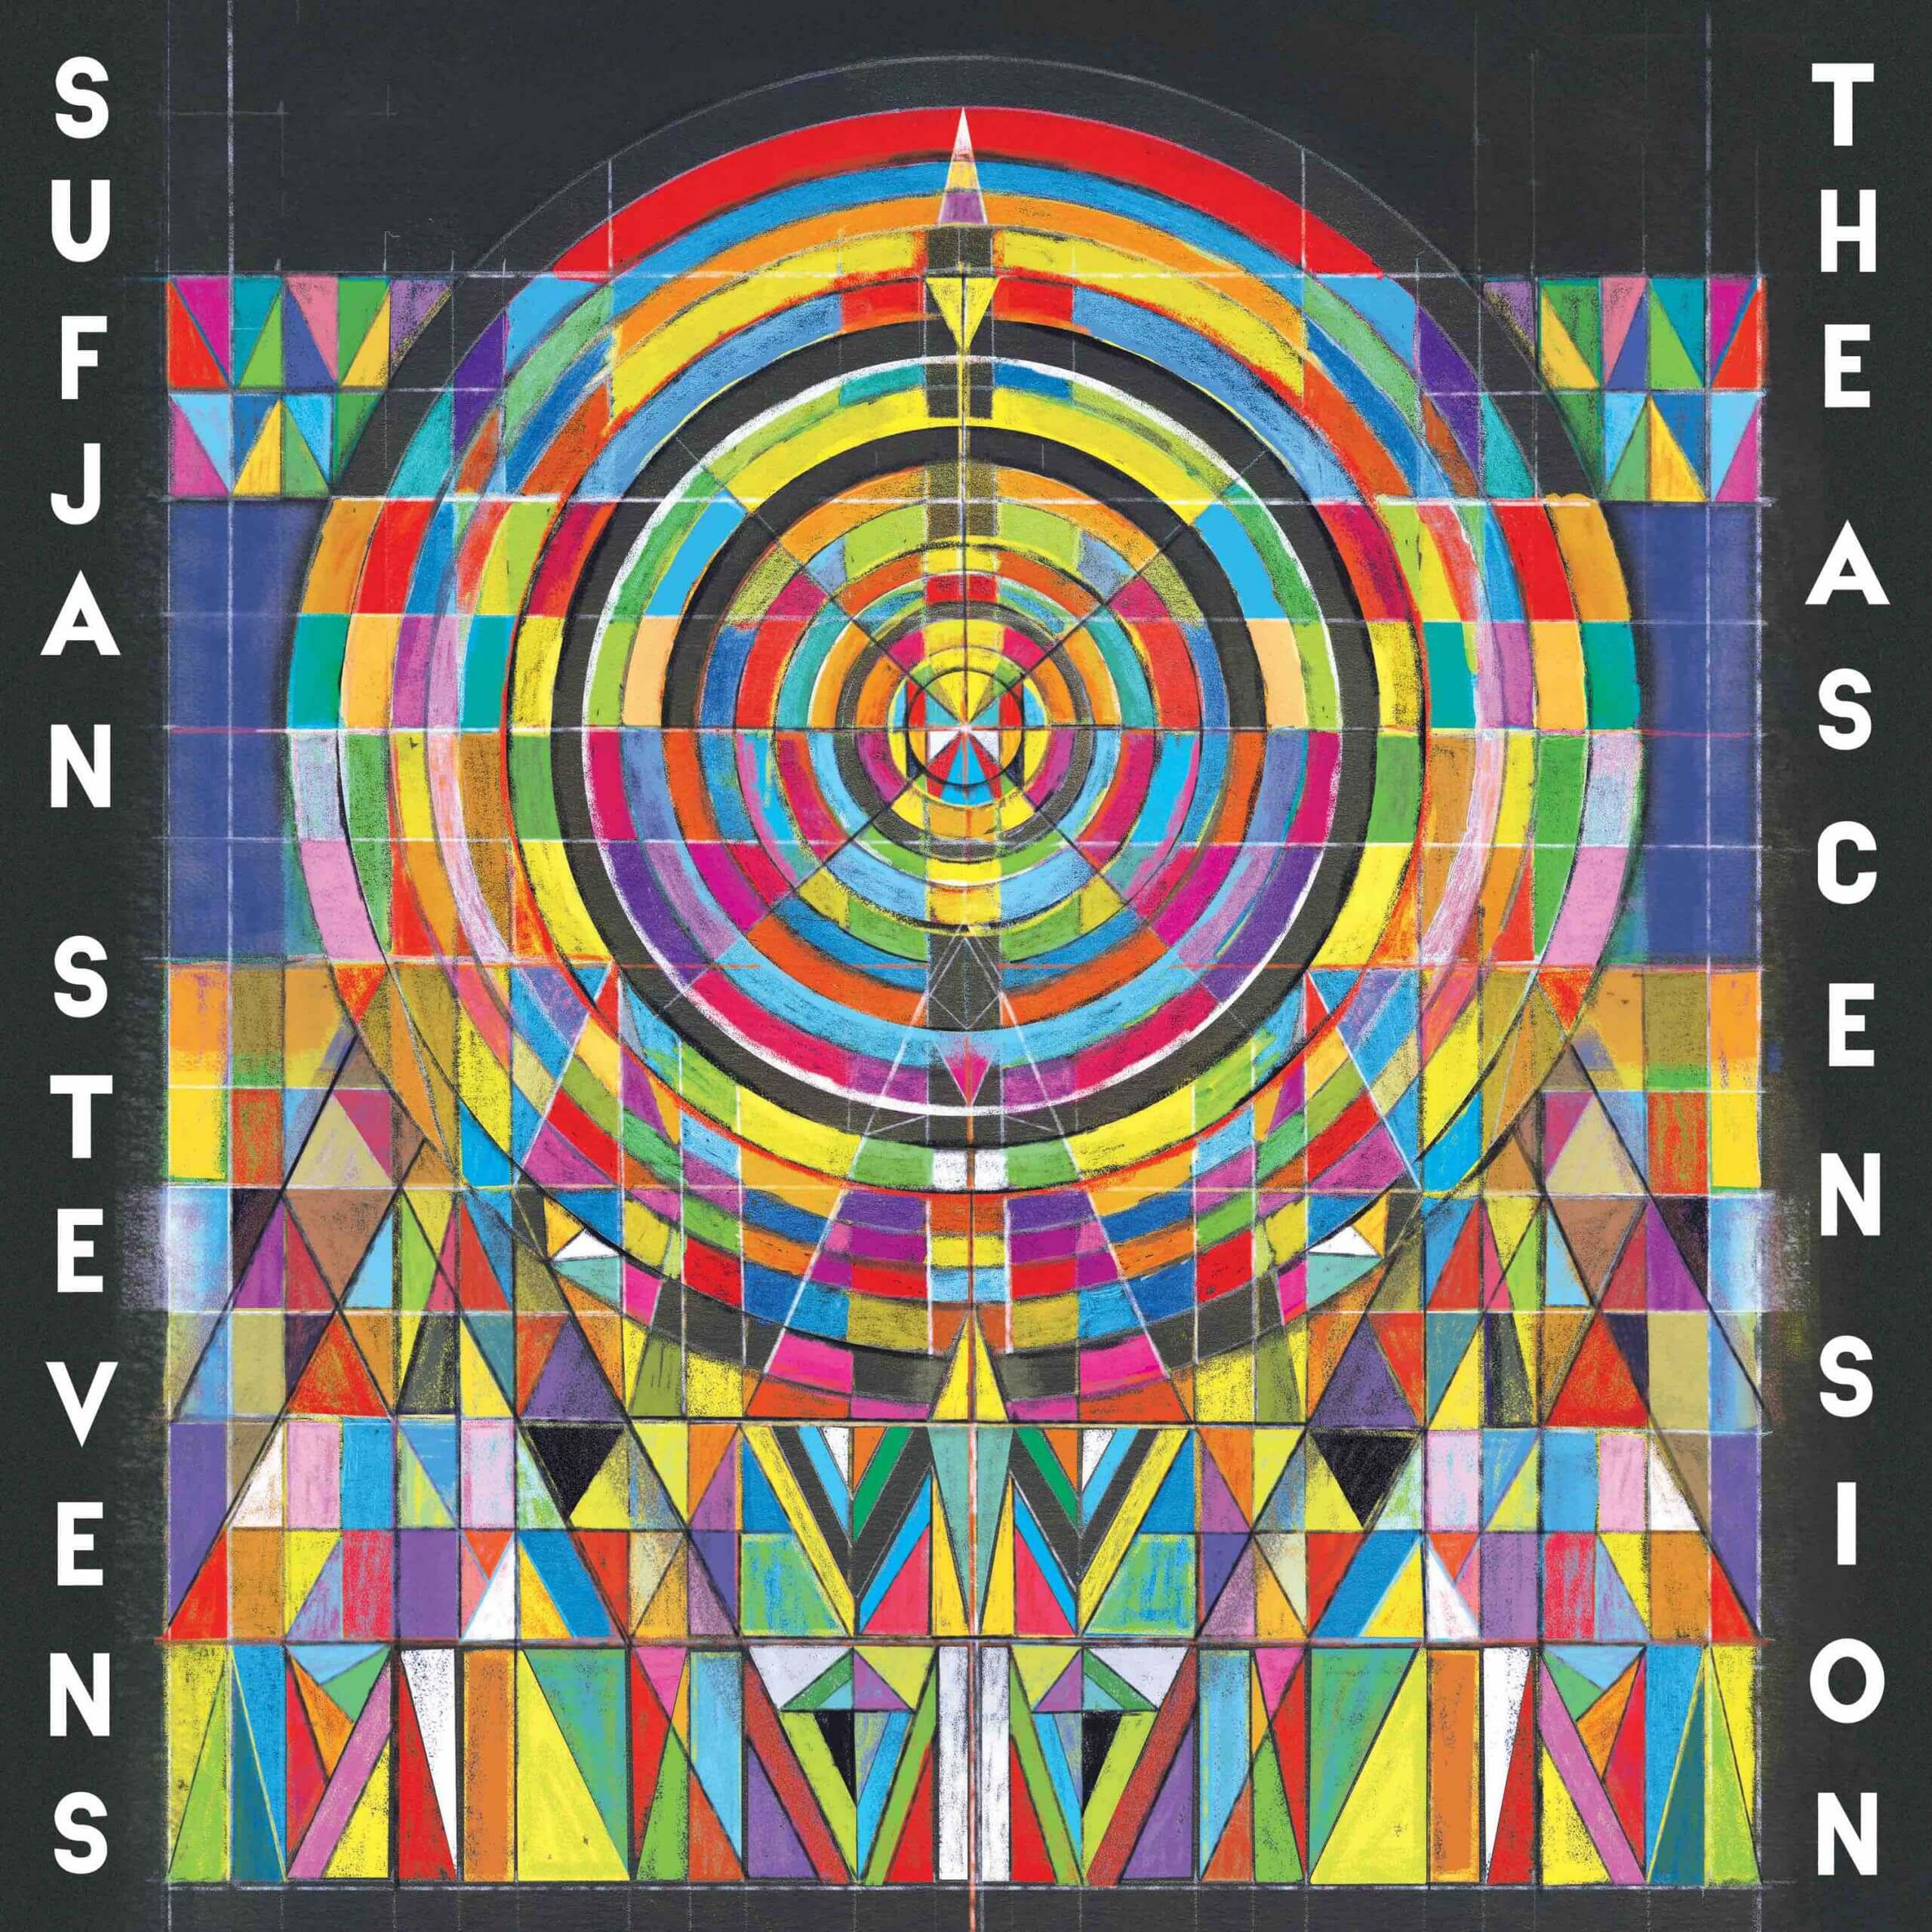 Novo disco de Sufjan Stevens, “The Ascension”, sai em Setembro